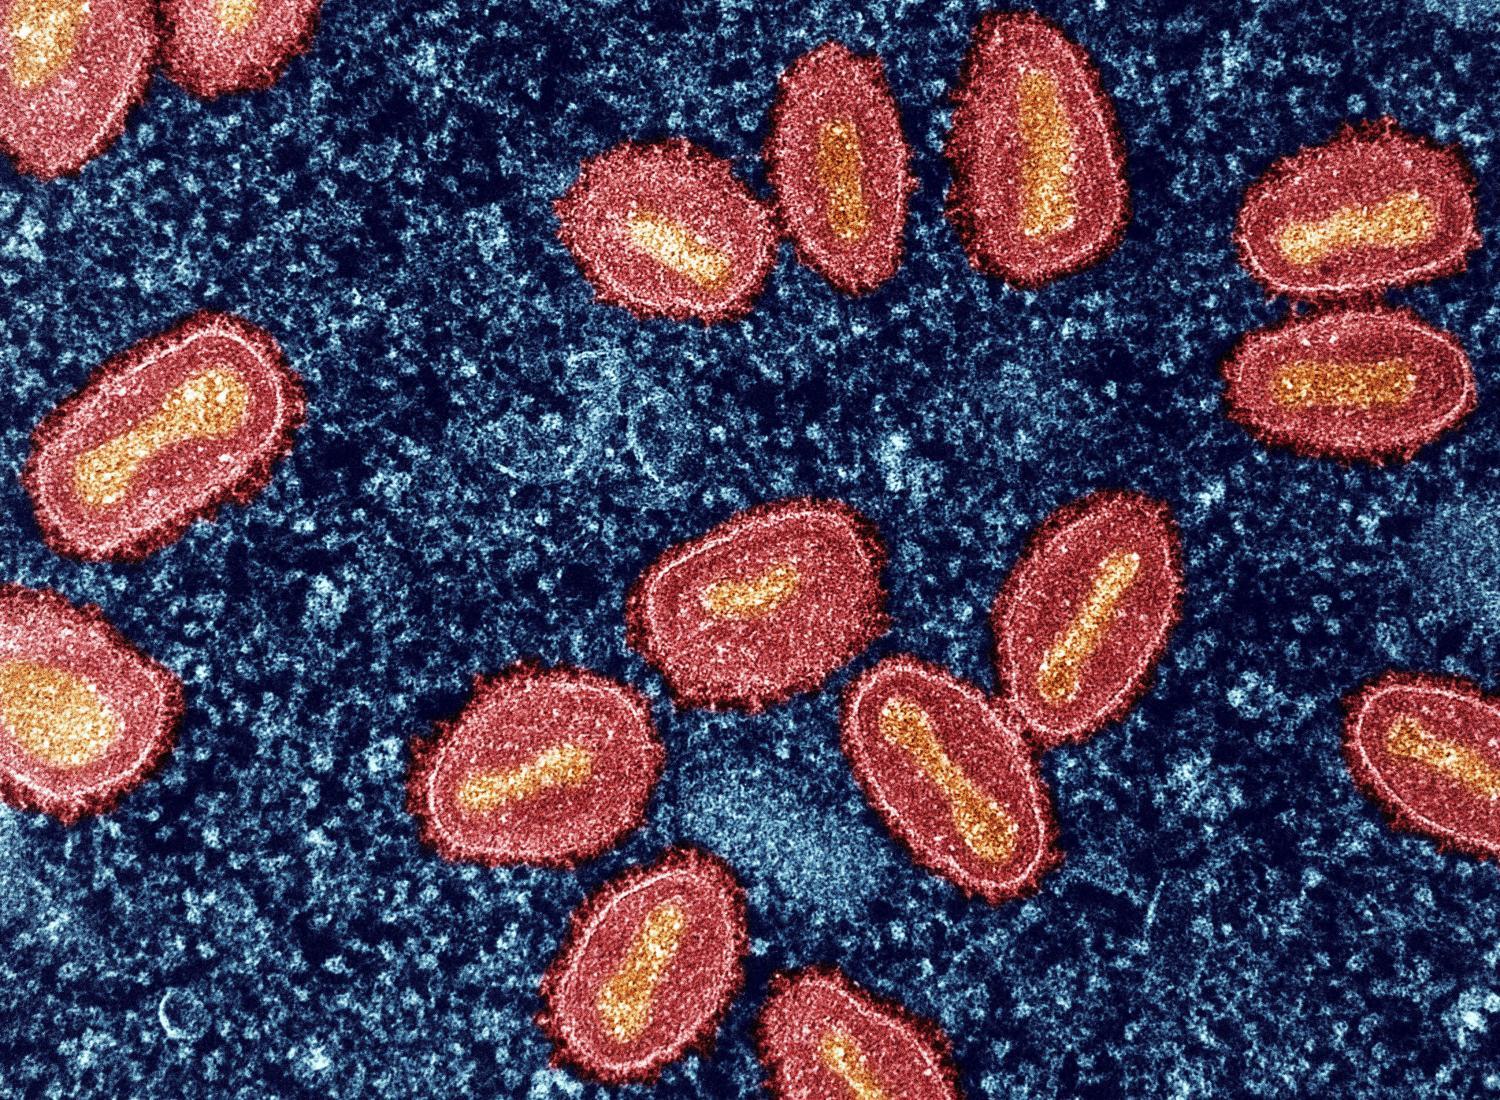 mpox micrograph